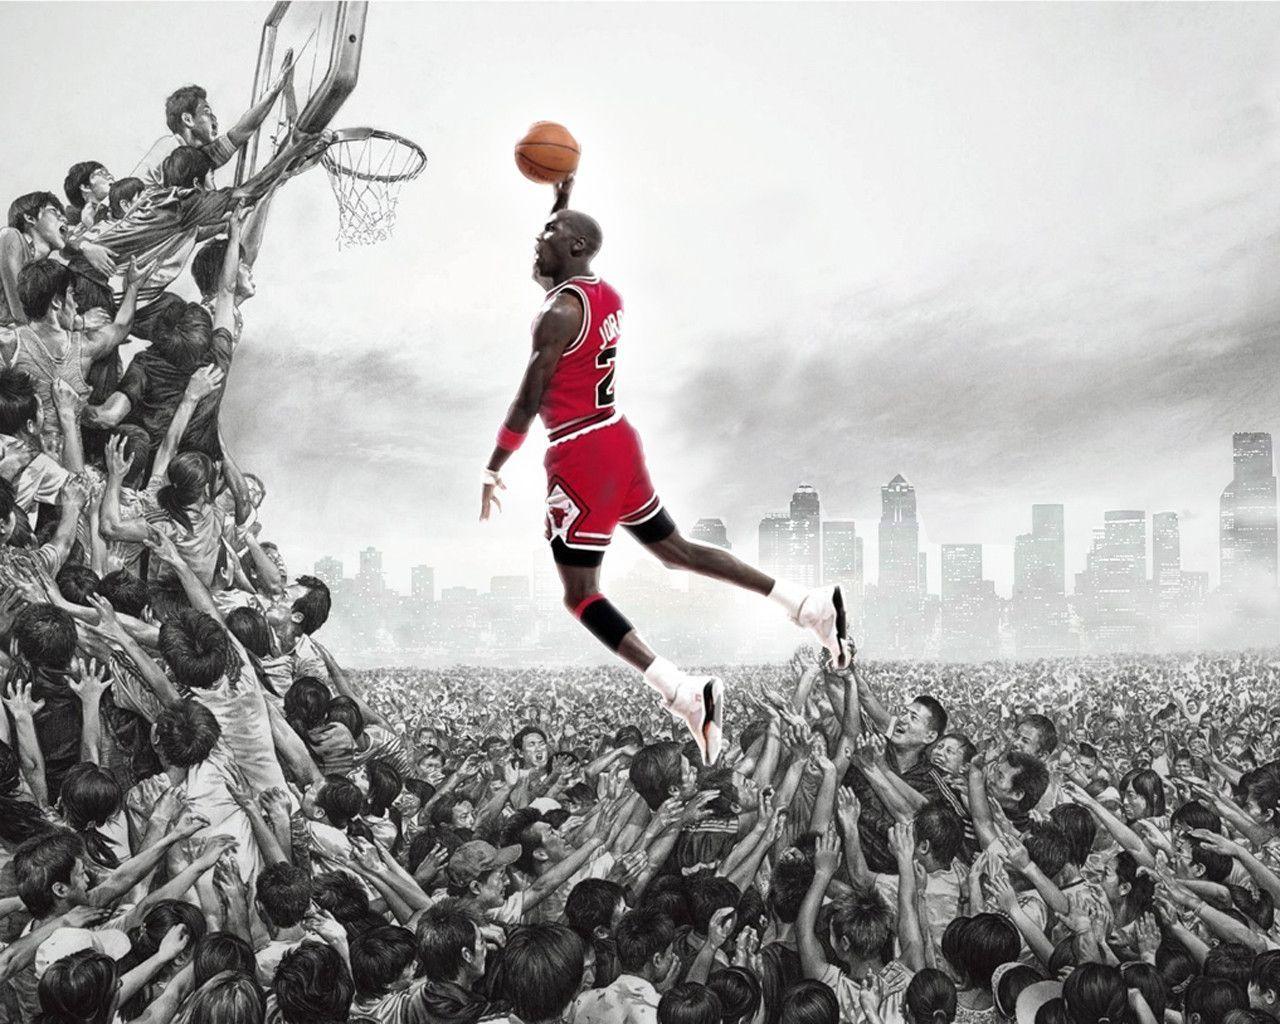 Michael Jordan Logo 26 116993 Image HD Wallpaper. Wallfoy.com